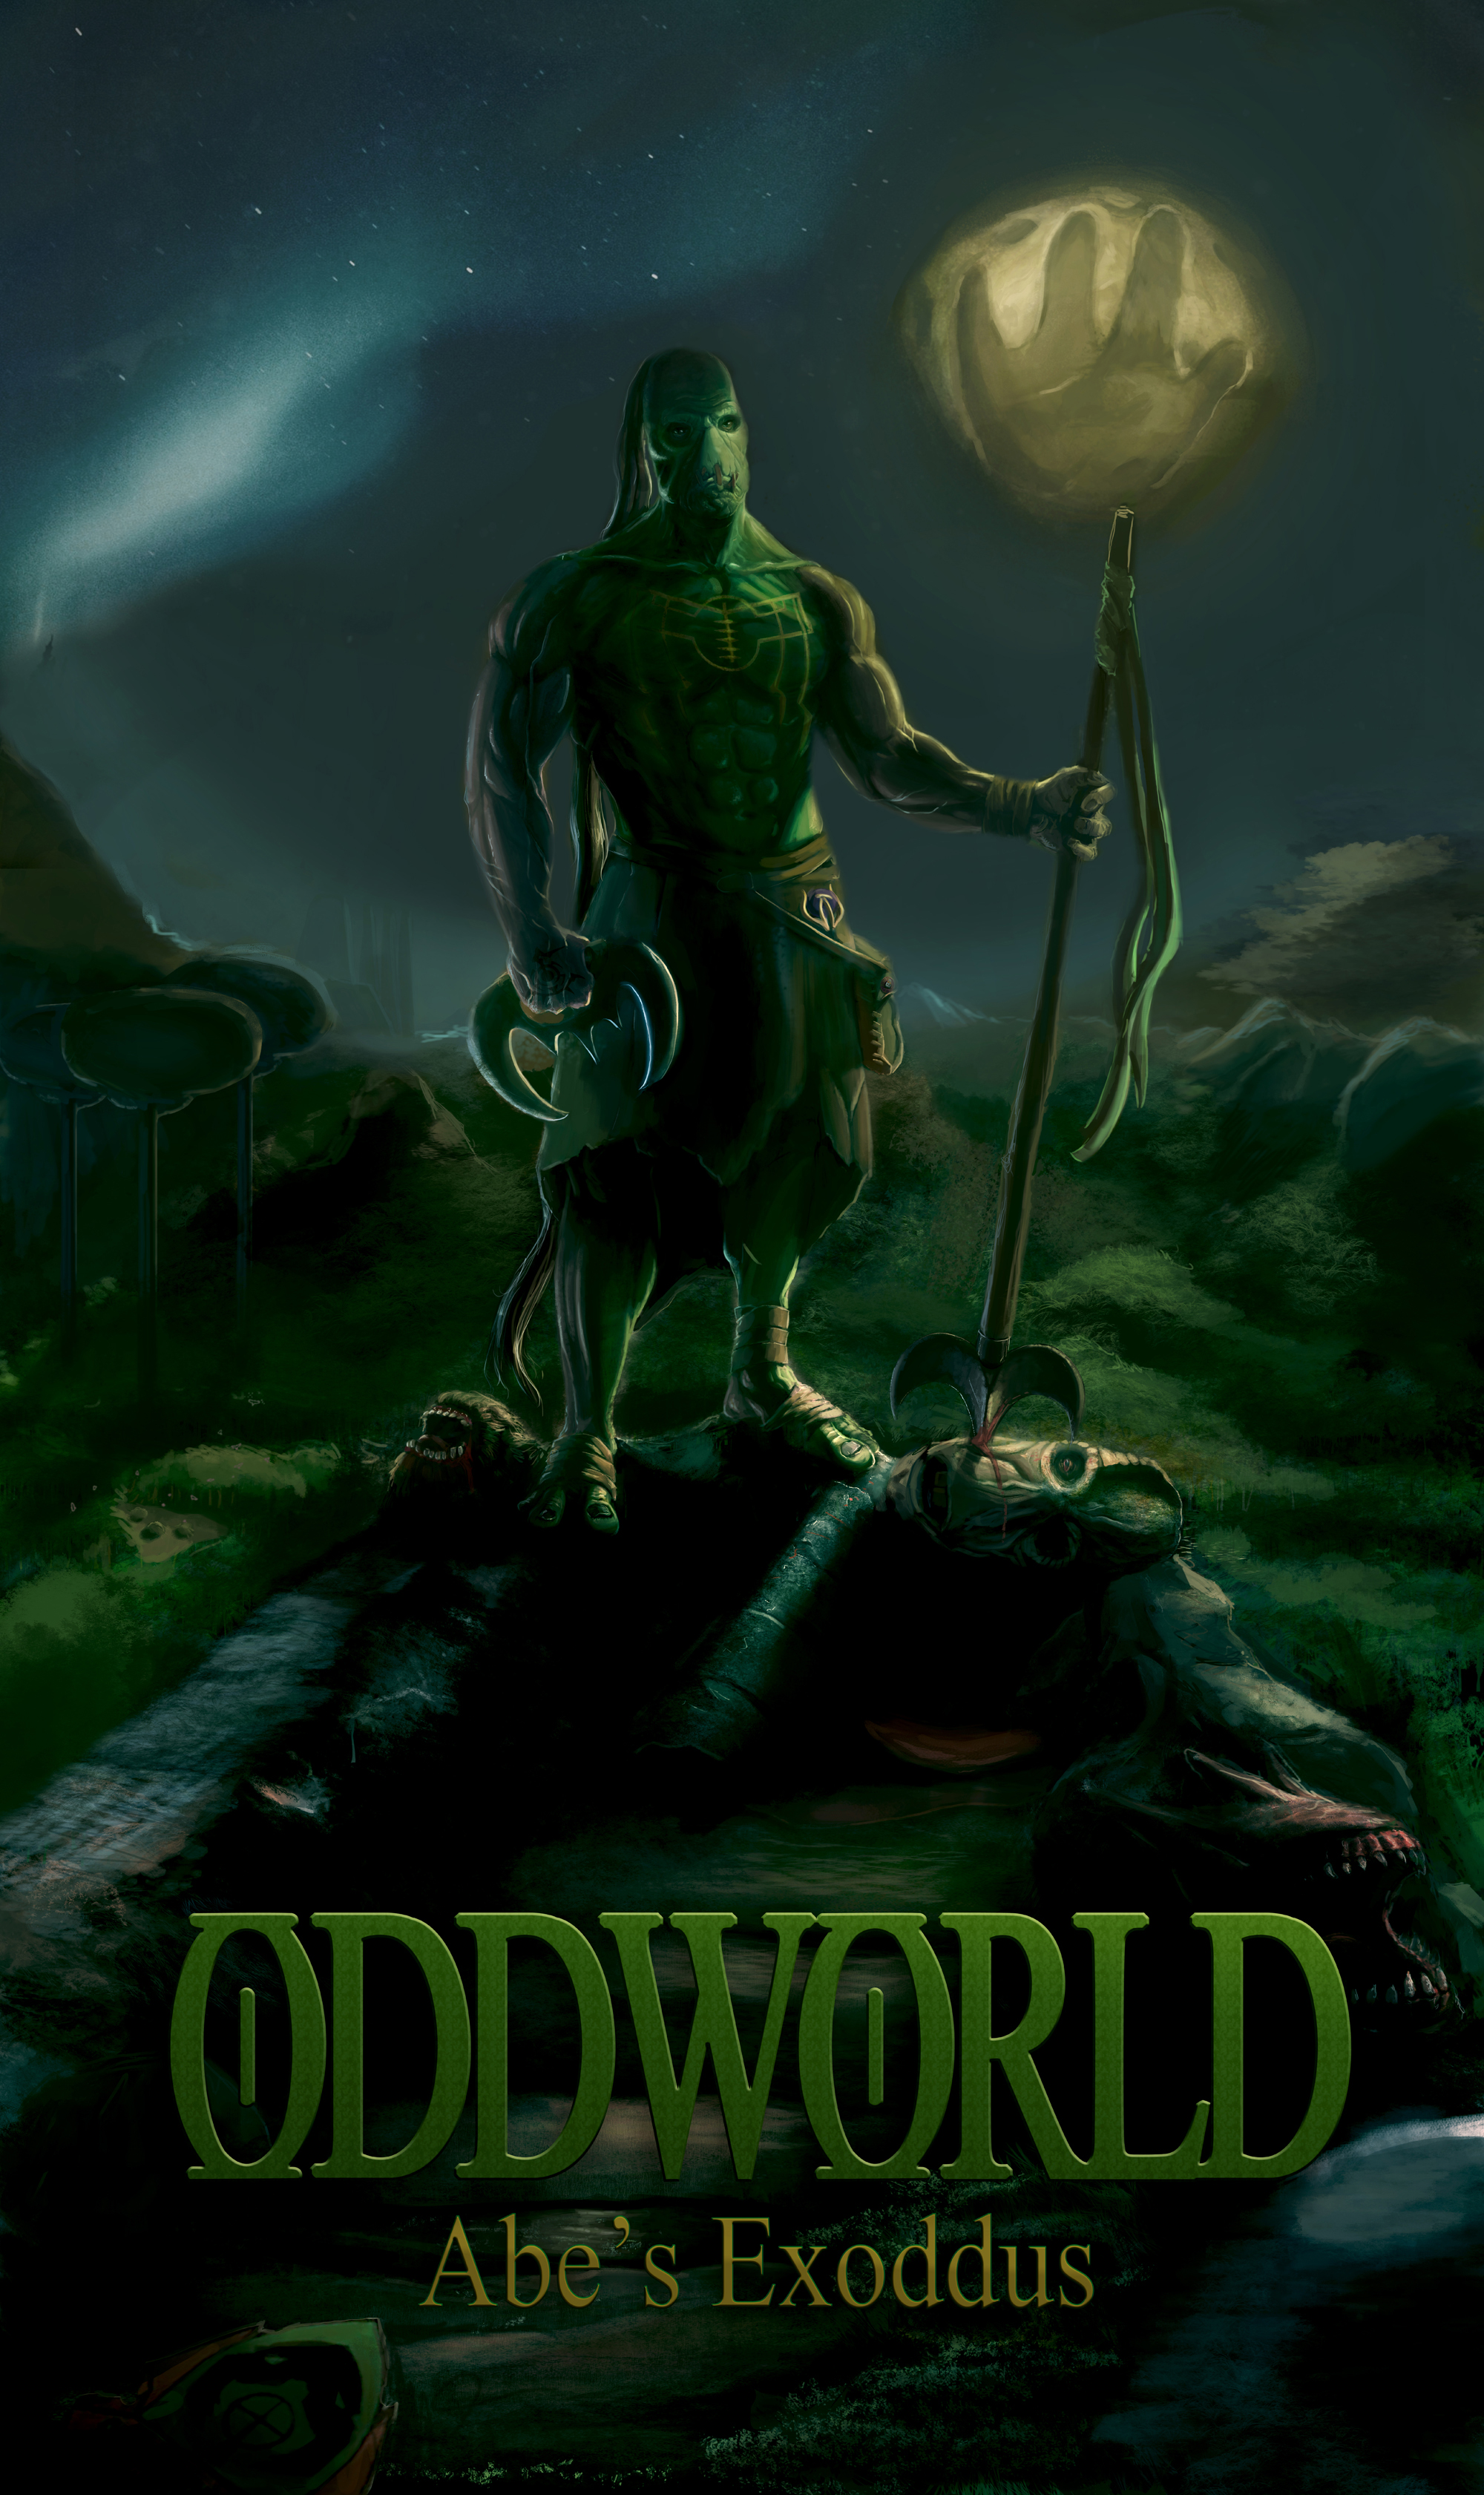 Oddworld: Abes Exoddus by CatsGameReviews on DeviantArt